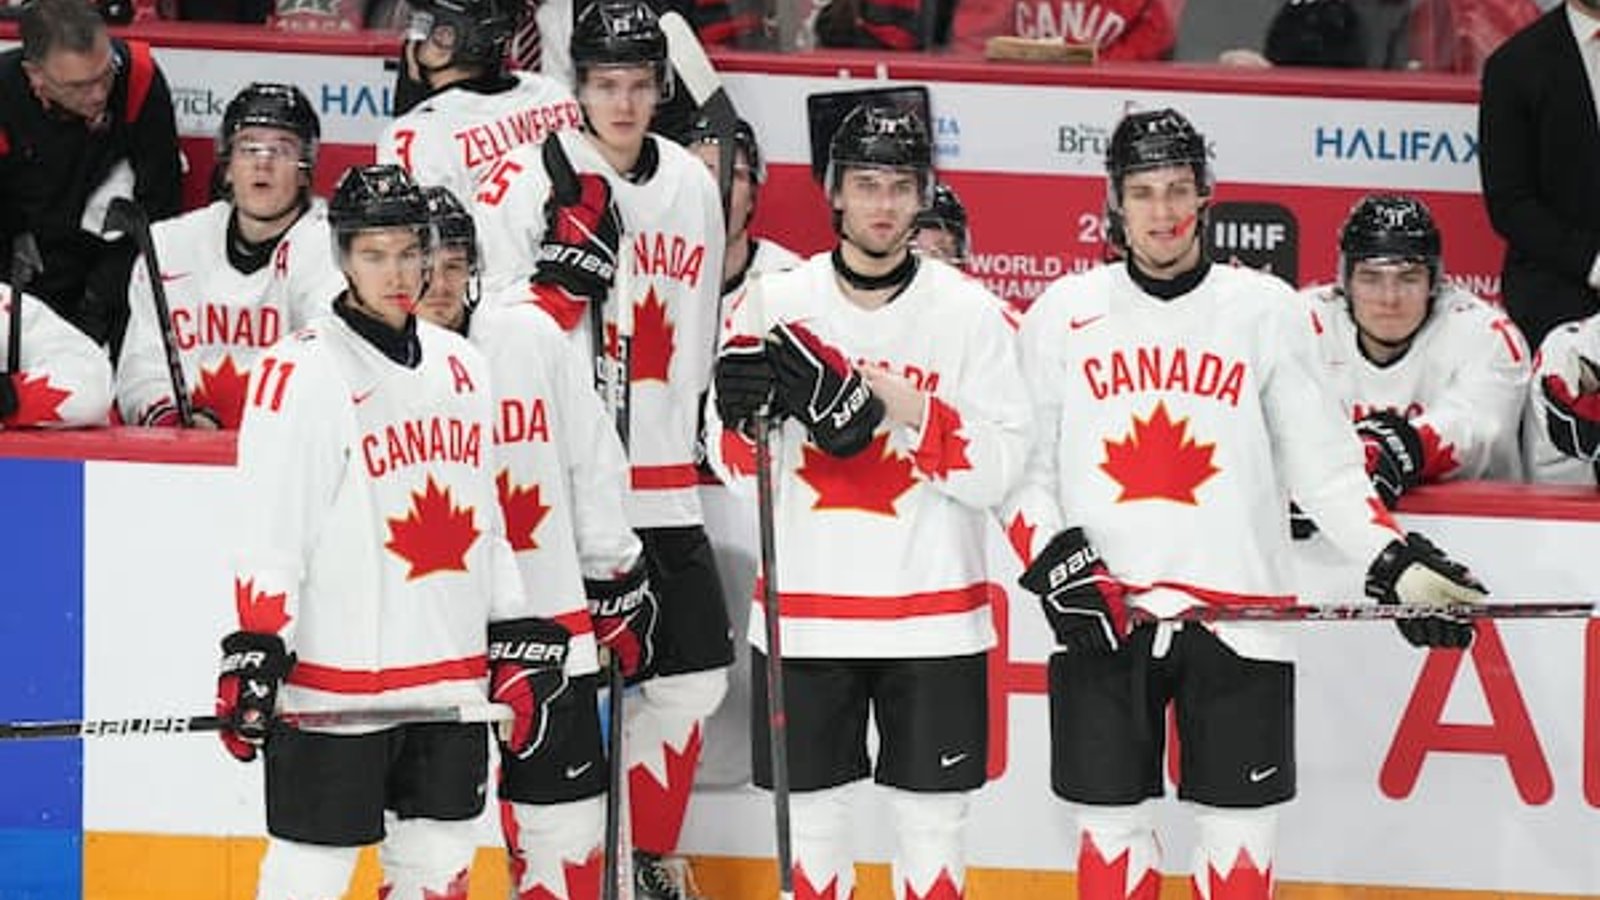 Équipe Canada junior : des statistiques encourageantes malgré un cuisant revers